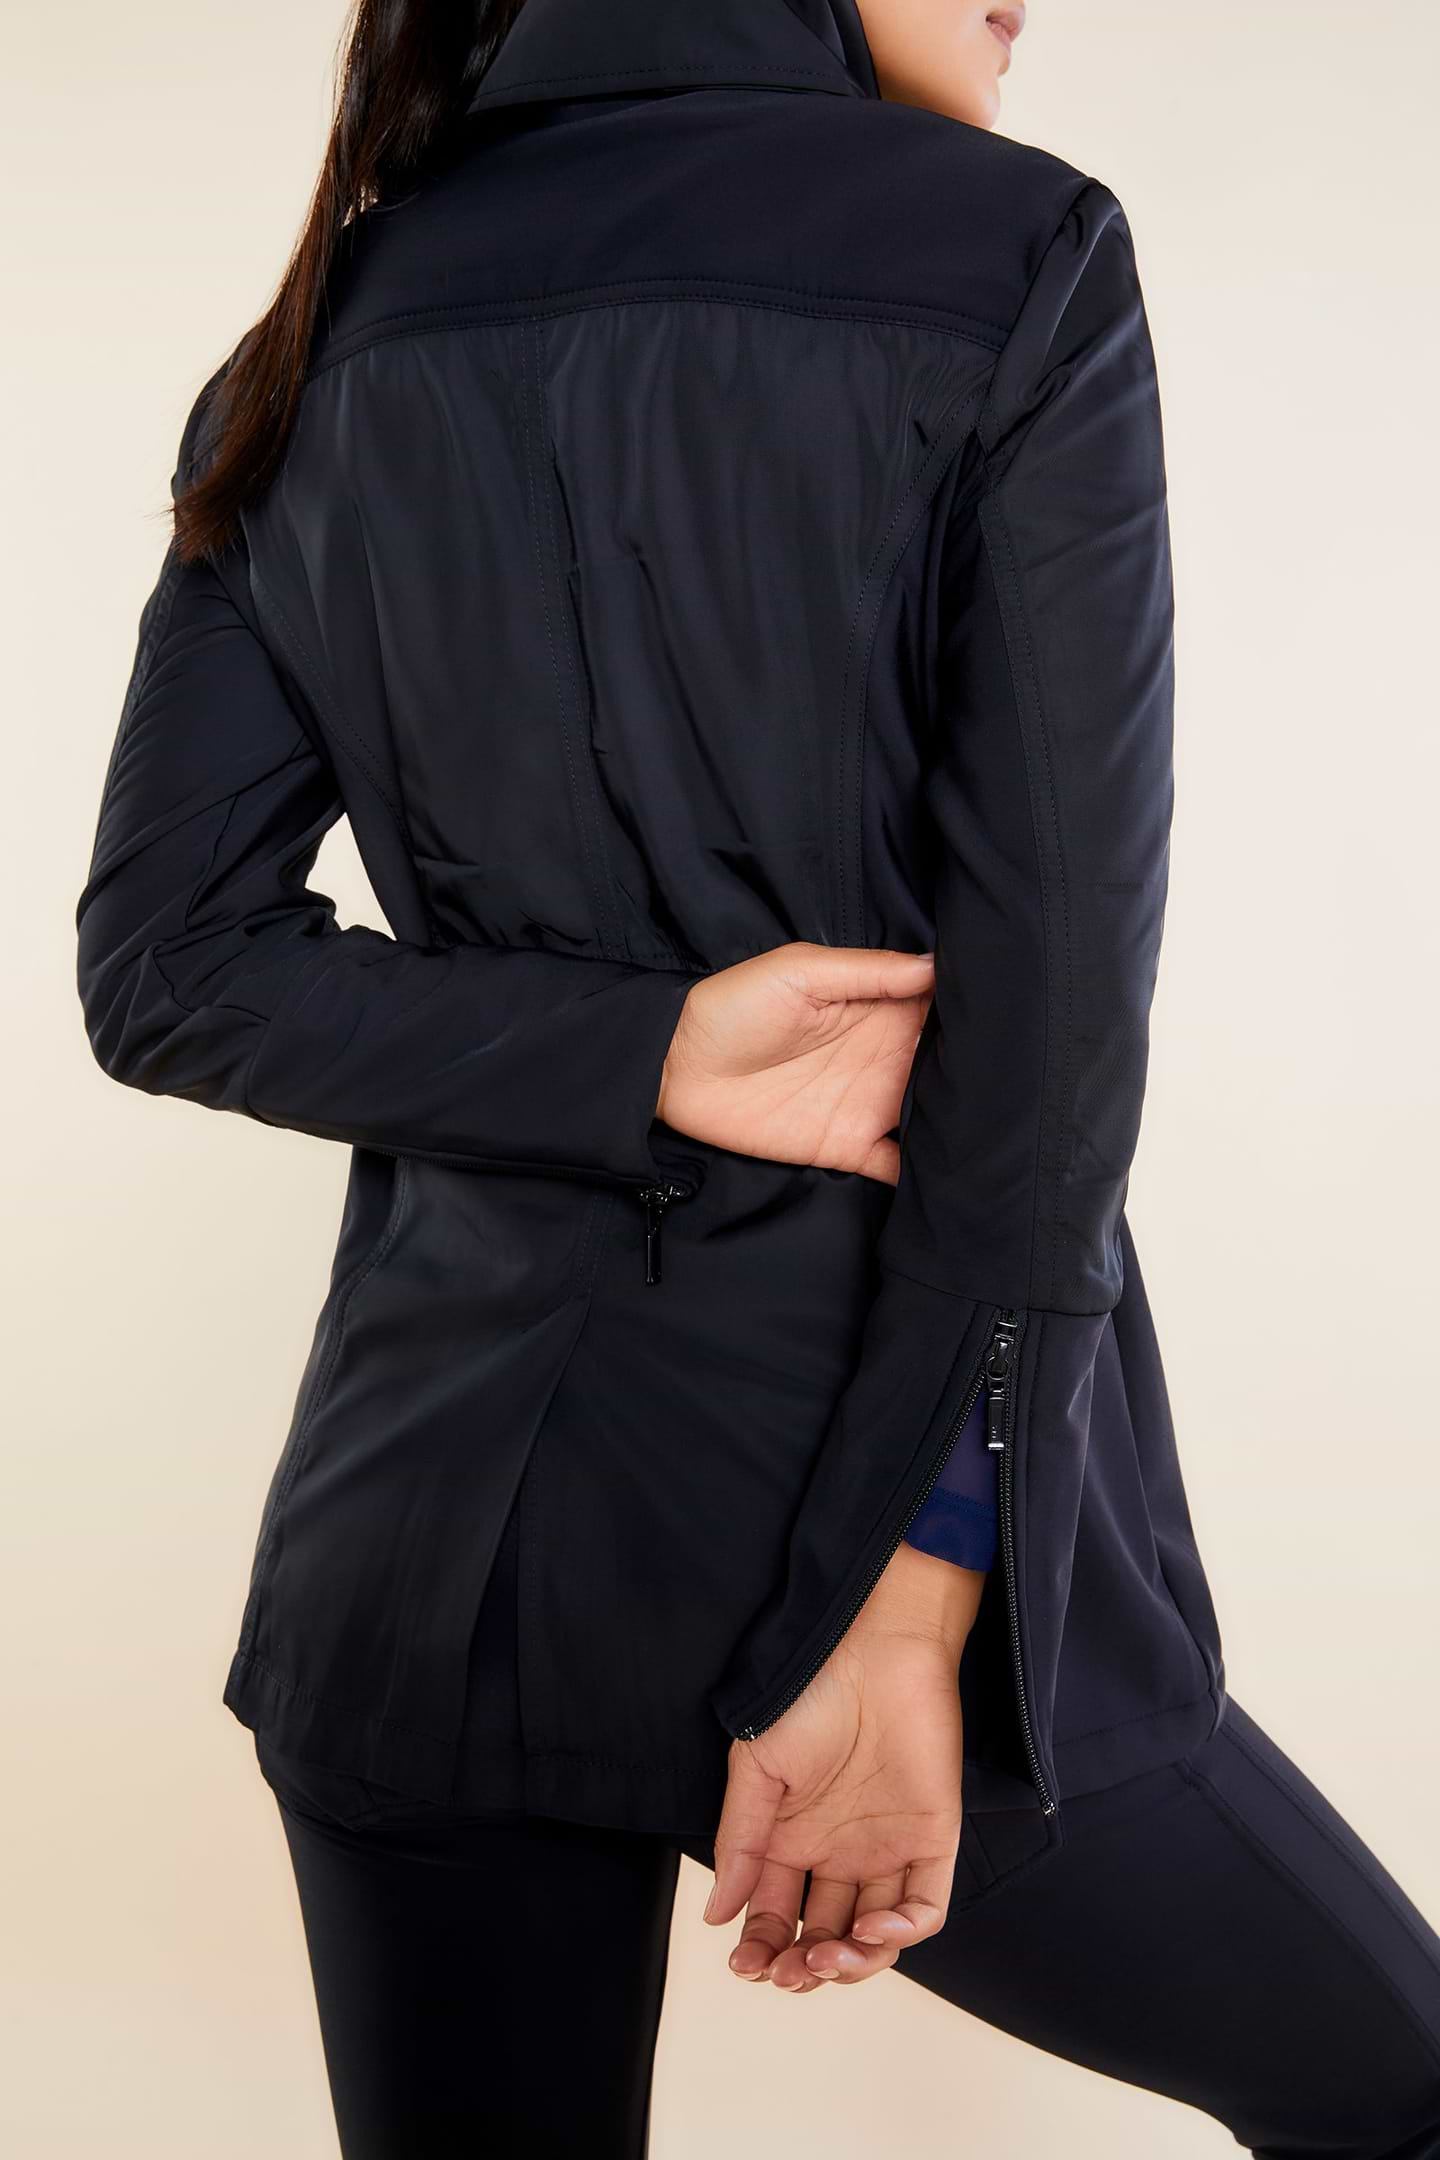 MOTIONS blazer Black 38                  EU MEN FASHION Jackets Elegant discount 99% 